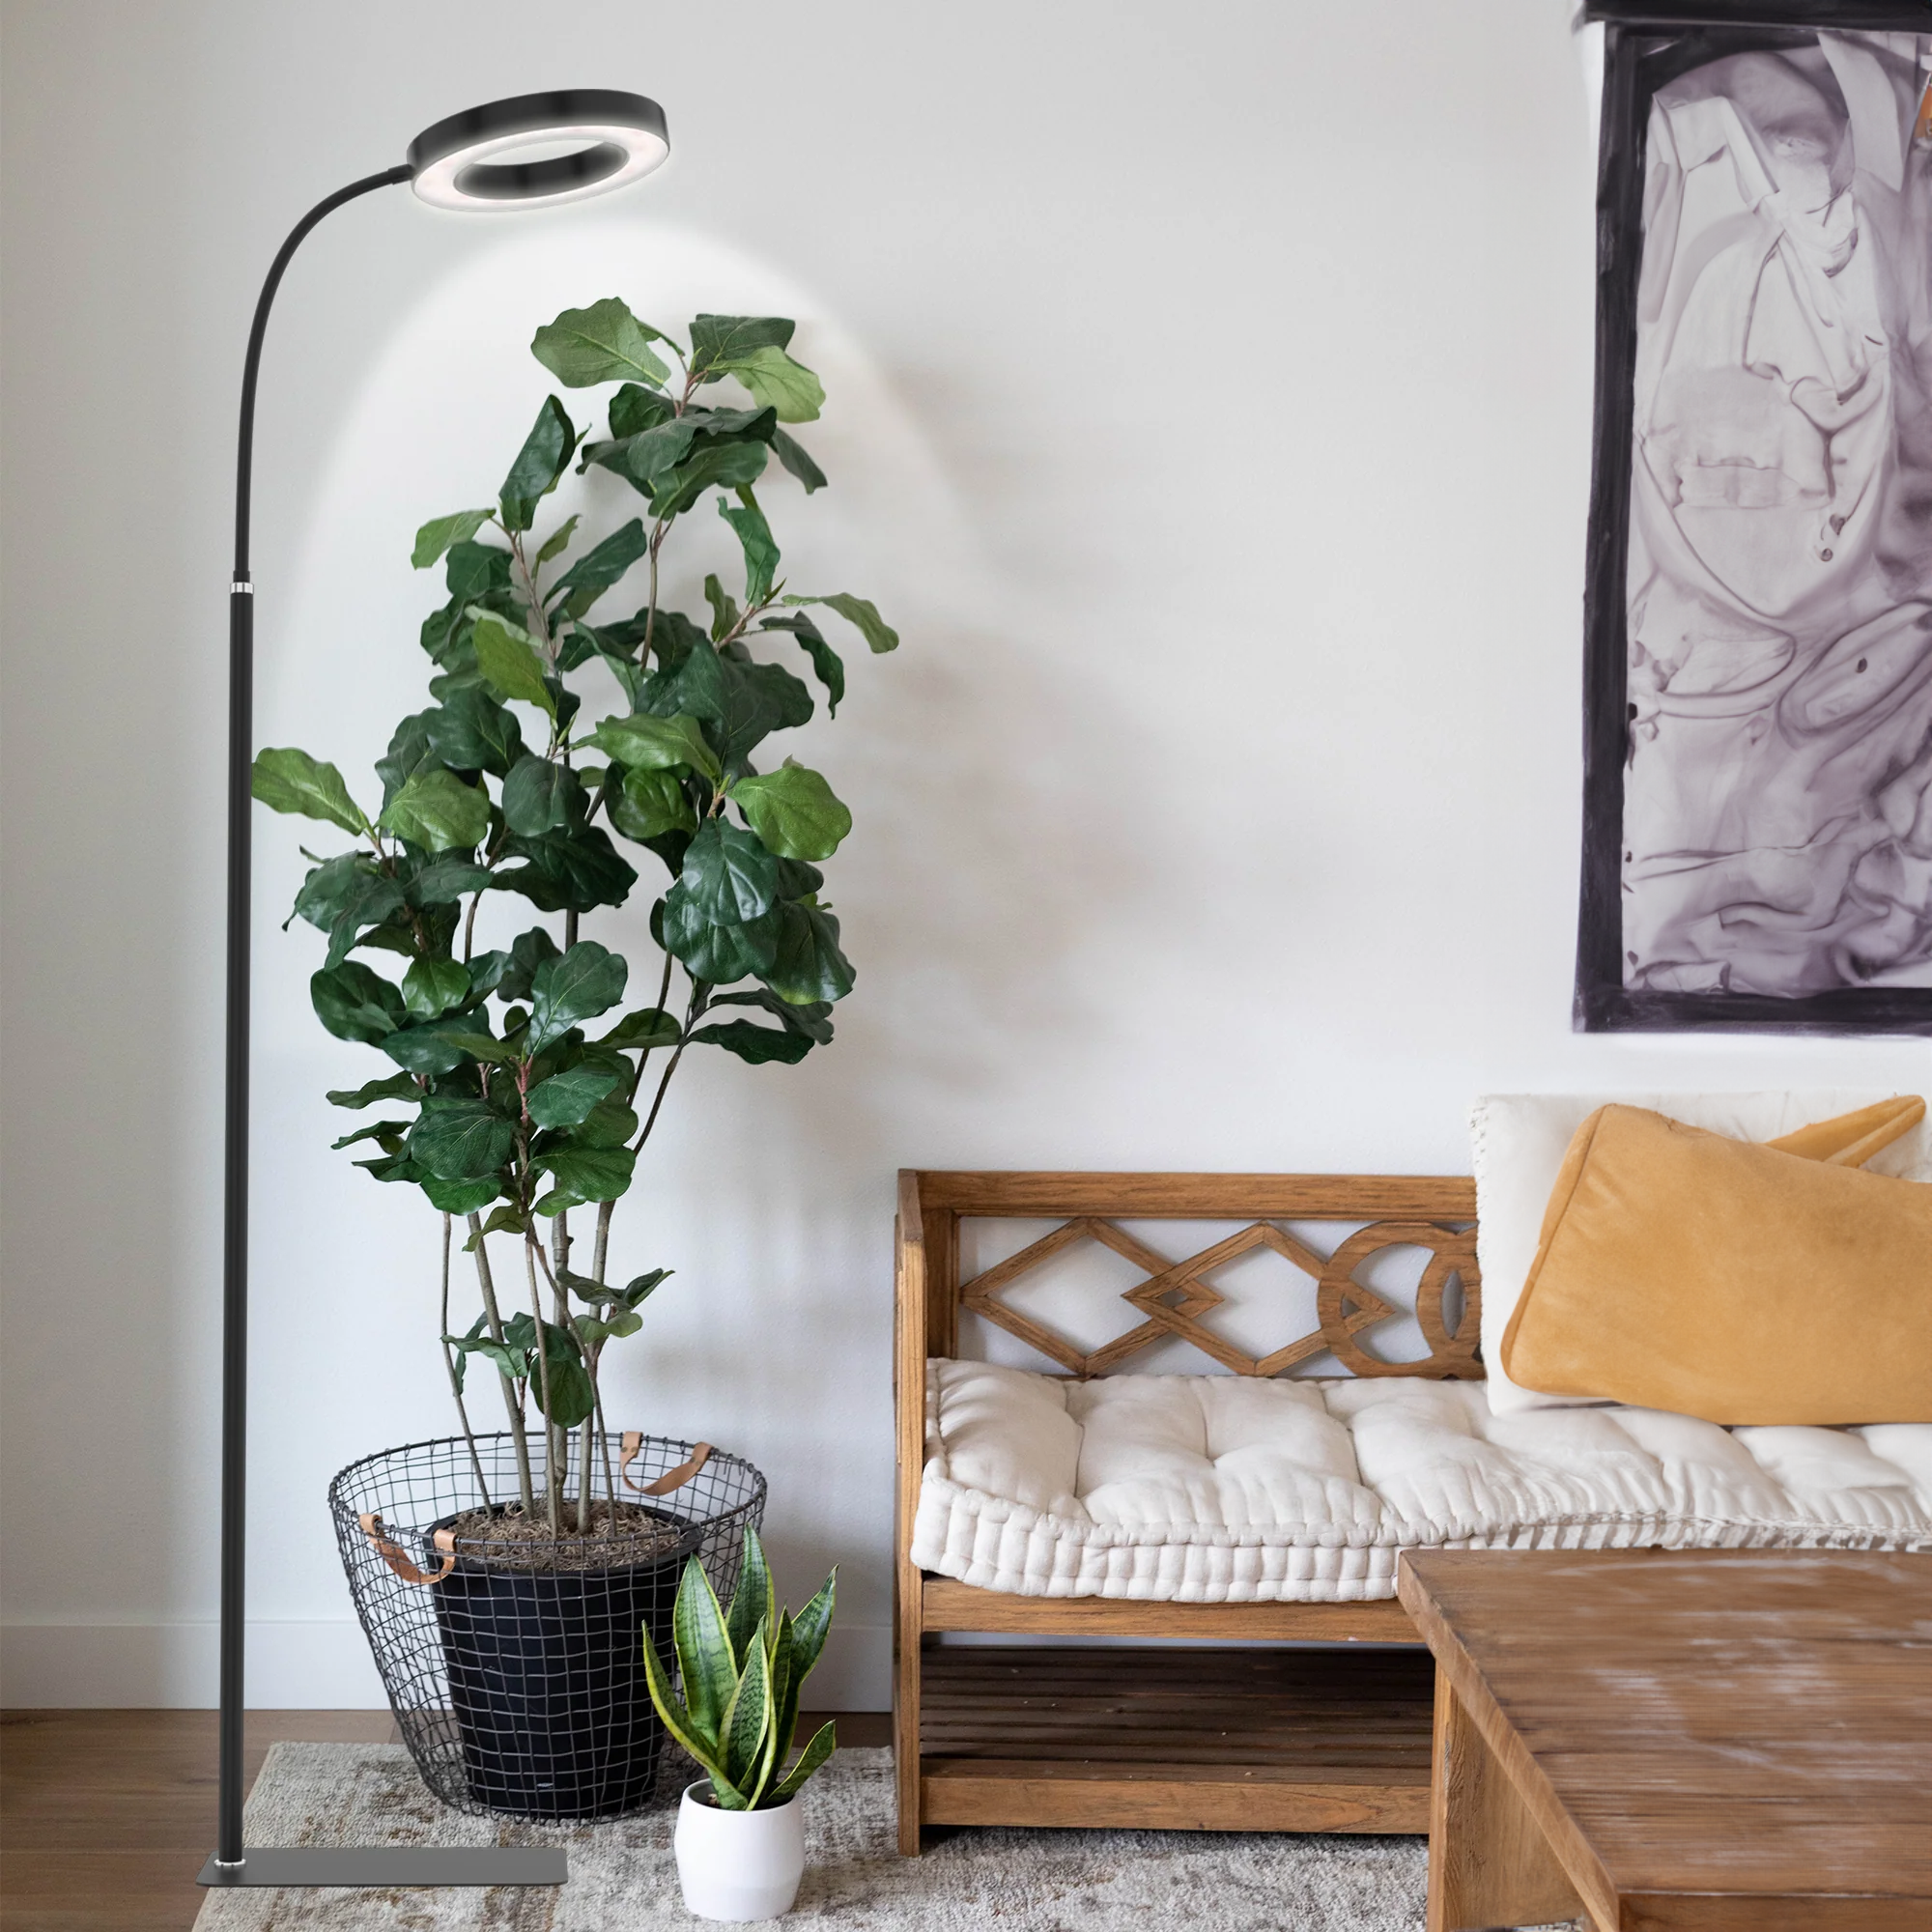 Glowrium's Houseplant Floor Grow Lamp In Black In A Home